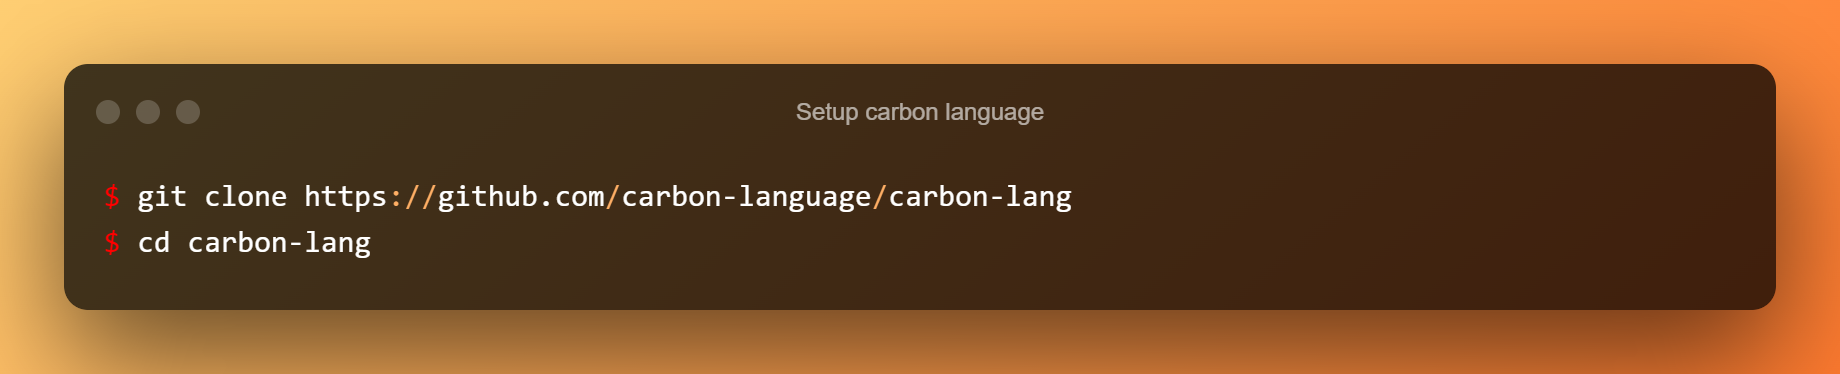 Setup Carbon Language